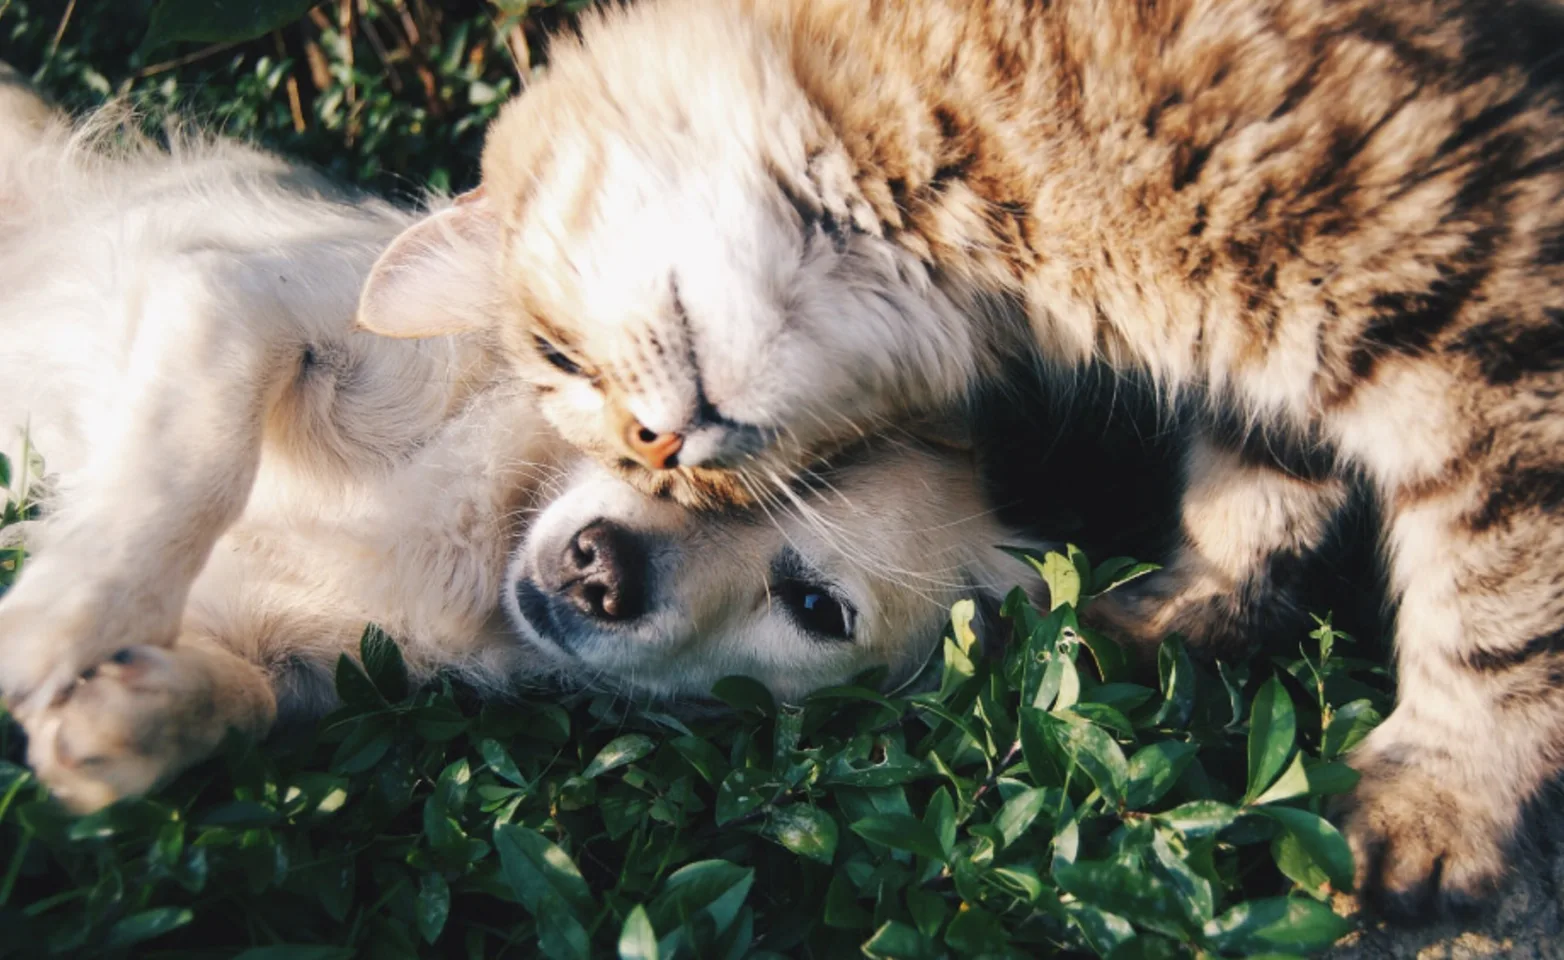 Dog & Cat cuddling in grass